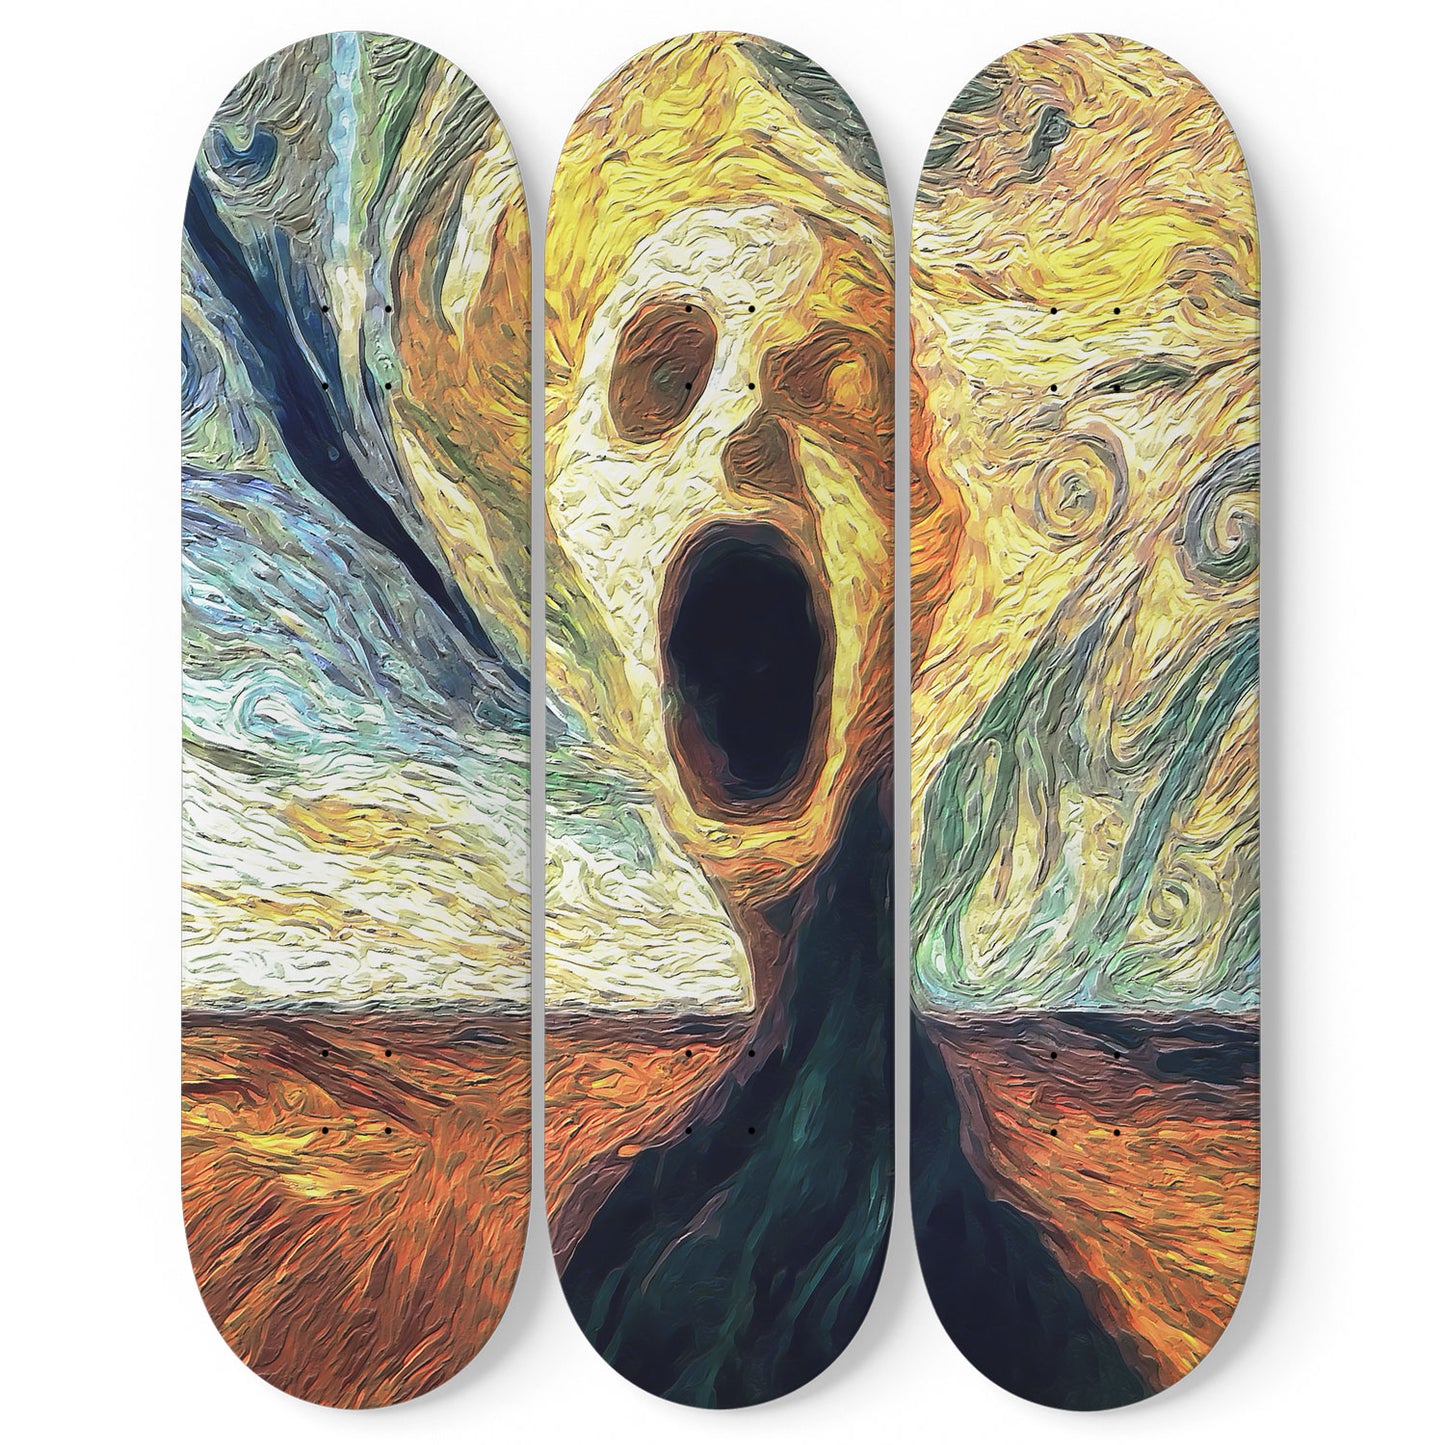 Van Gogh Echo 3-Deck Skateboard Wall Art: Masterpiece in Motion